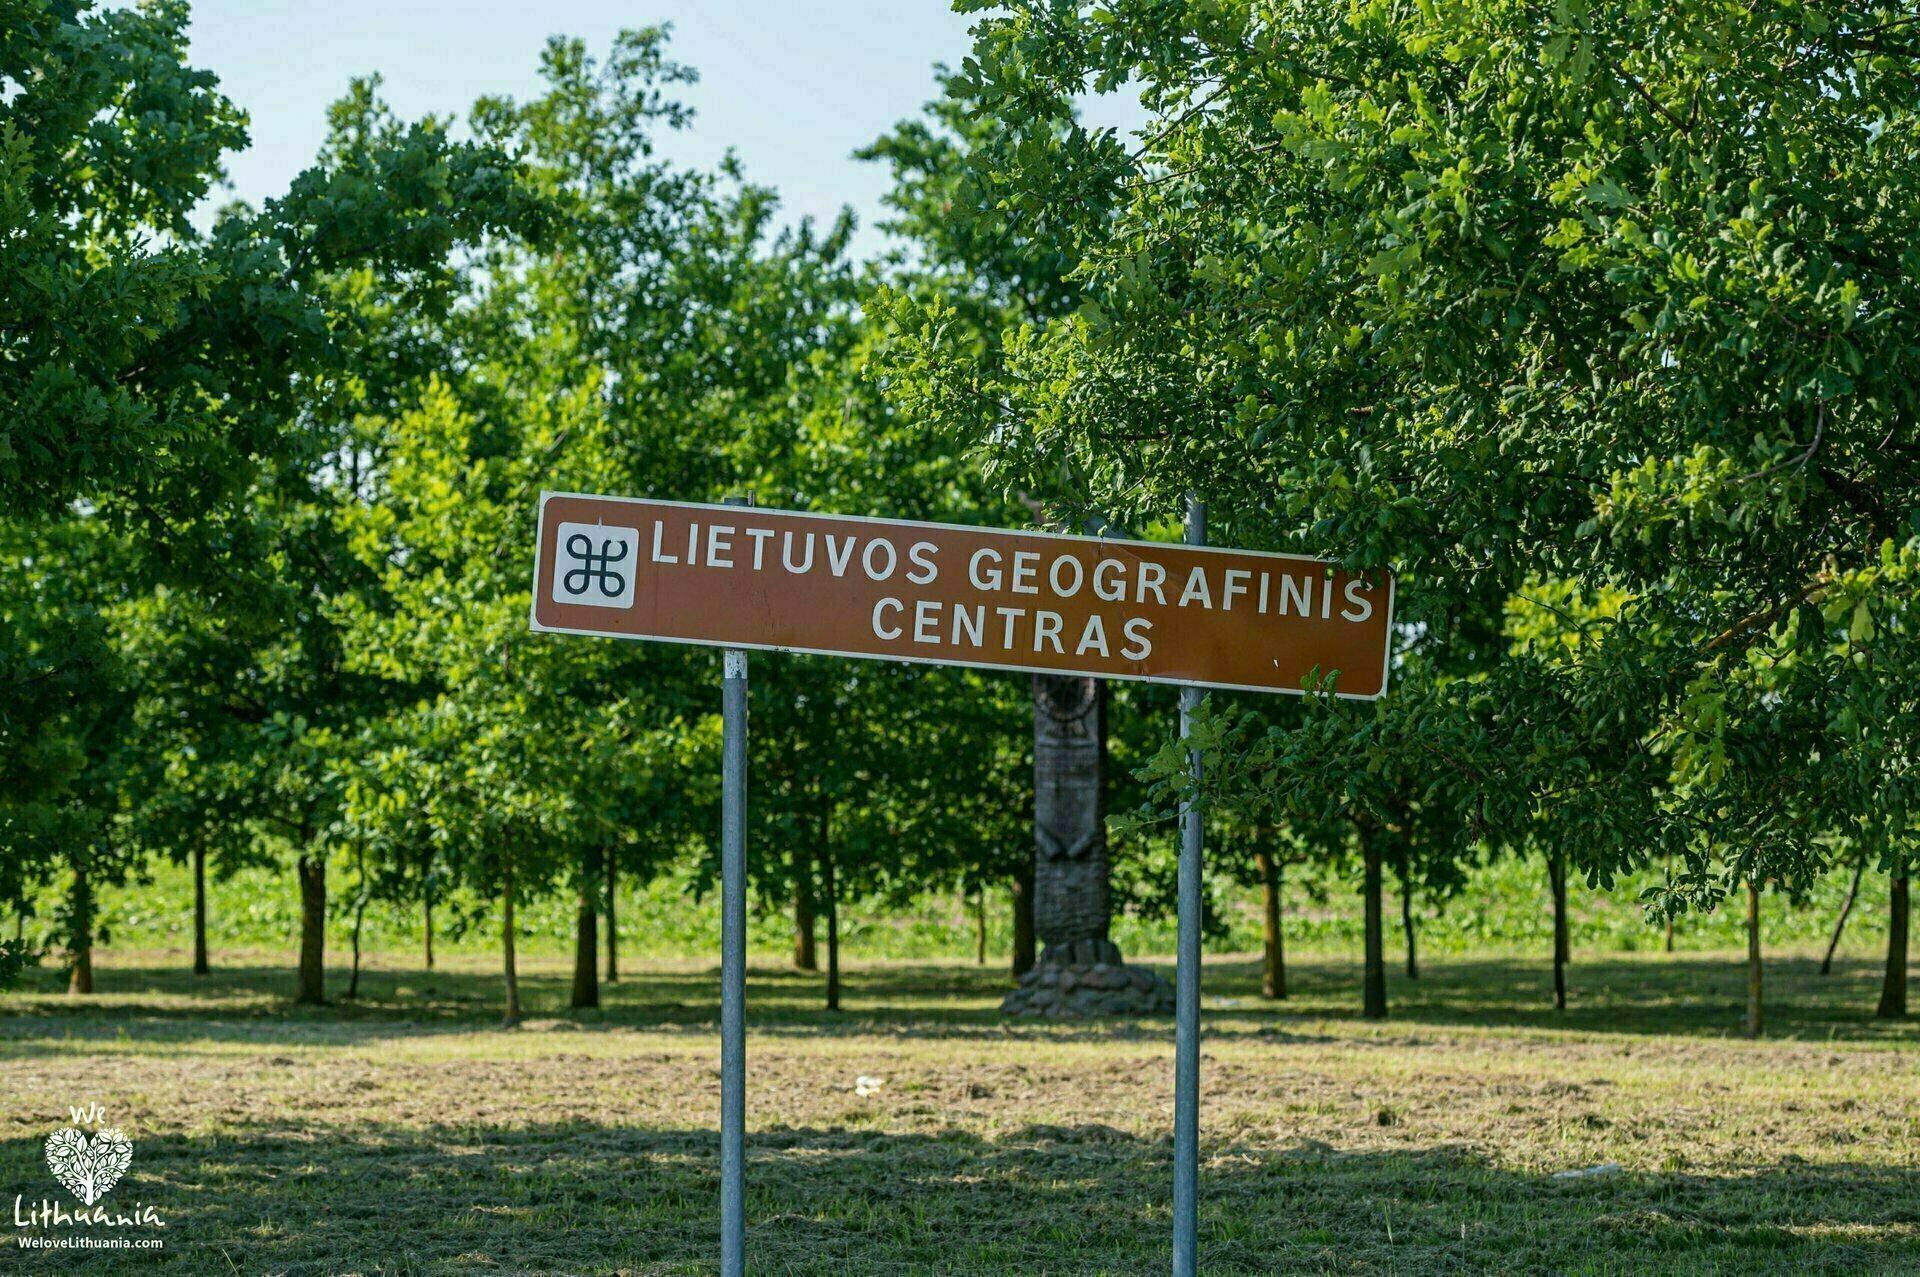 Lietuvos geografinis centras